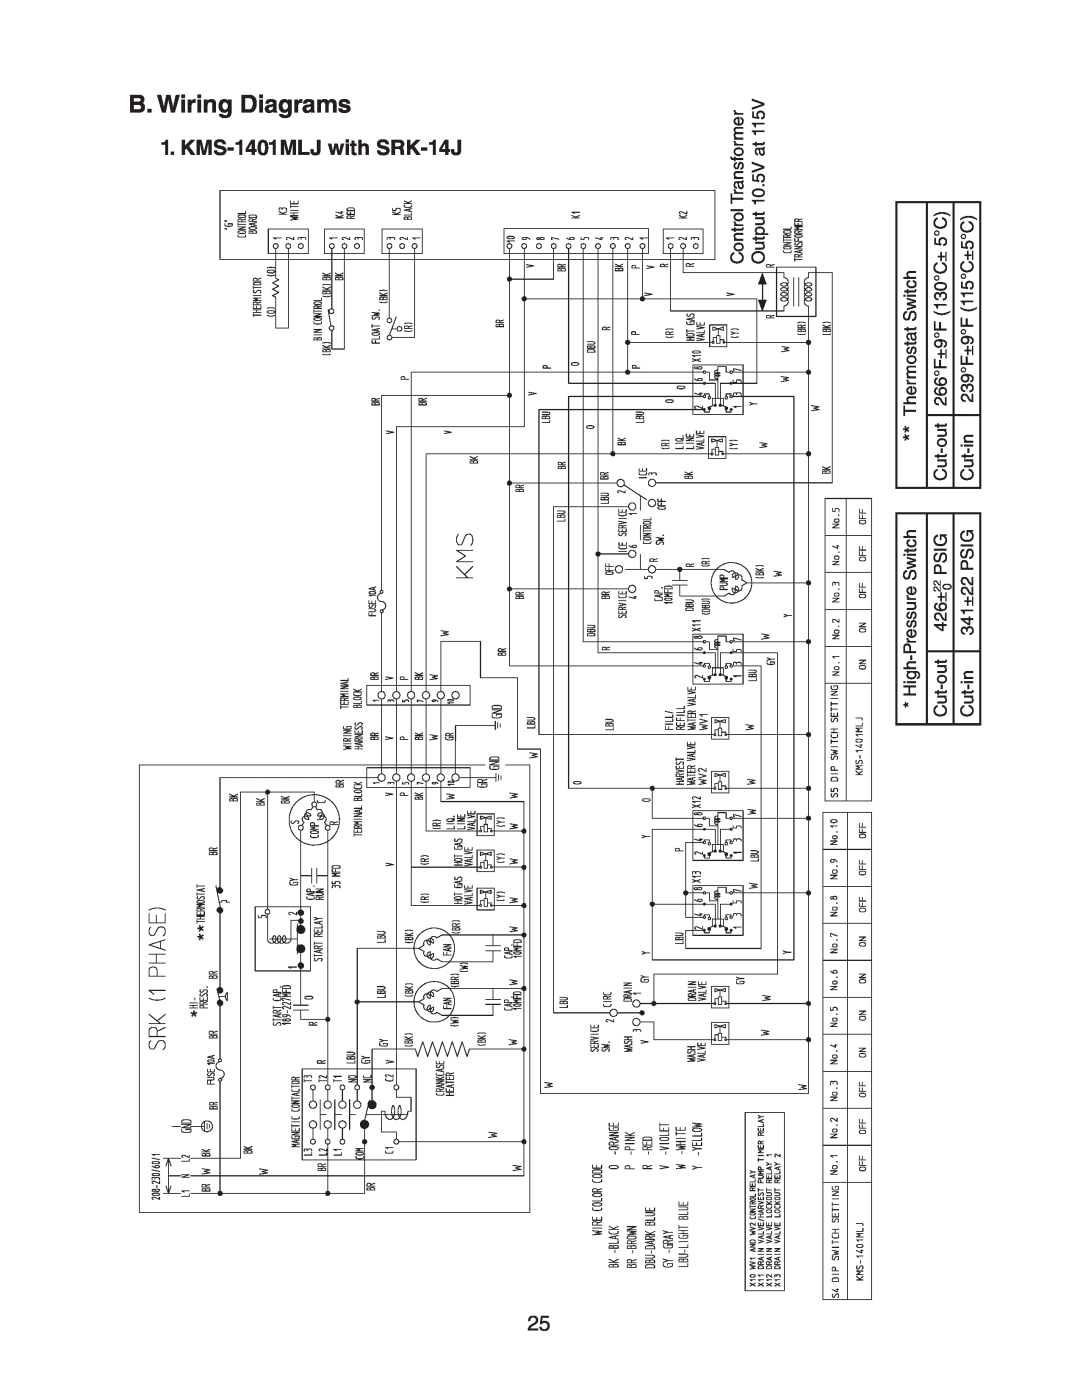 Hoshizaki Condensing Unit Models SRK-14J/3 B. Wiring Diagrams, KMS-1401MLJ with SRK-14J, Transformer 10.5V at 